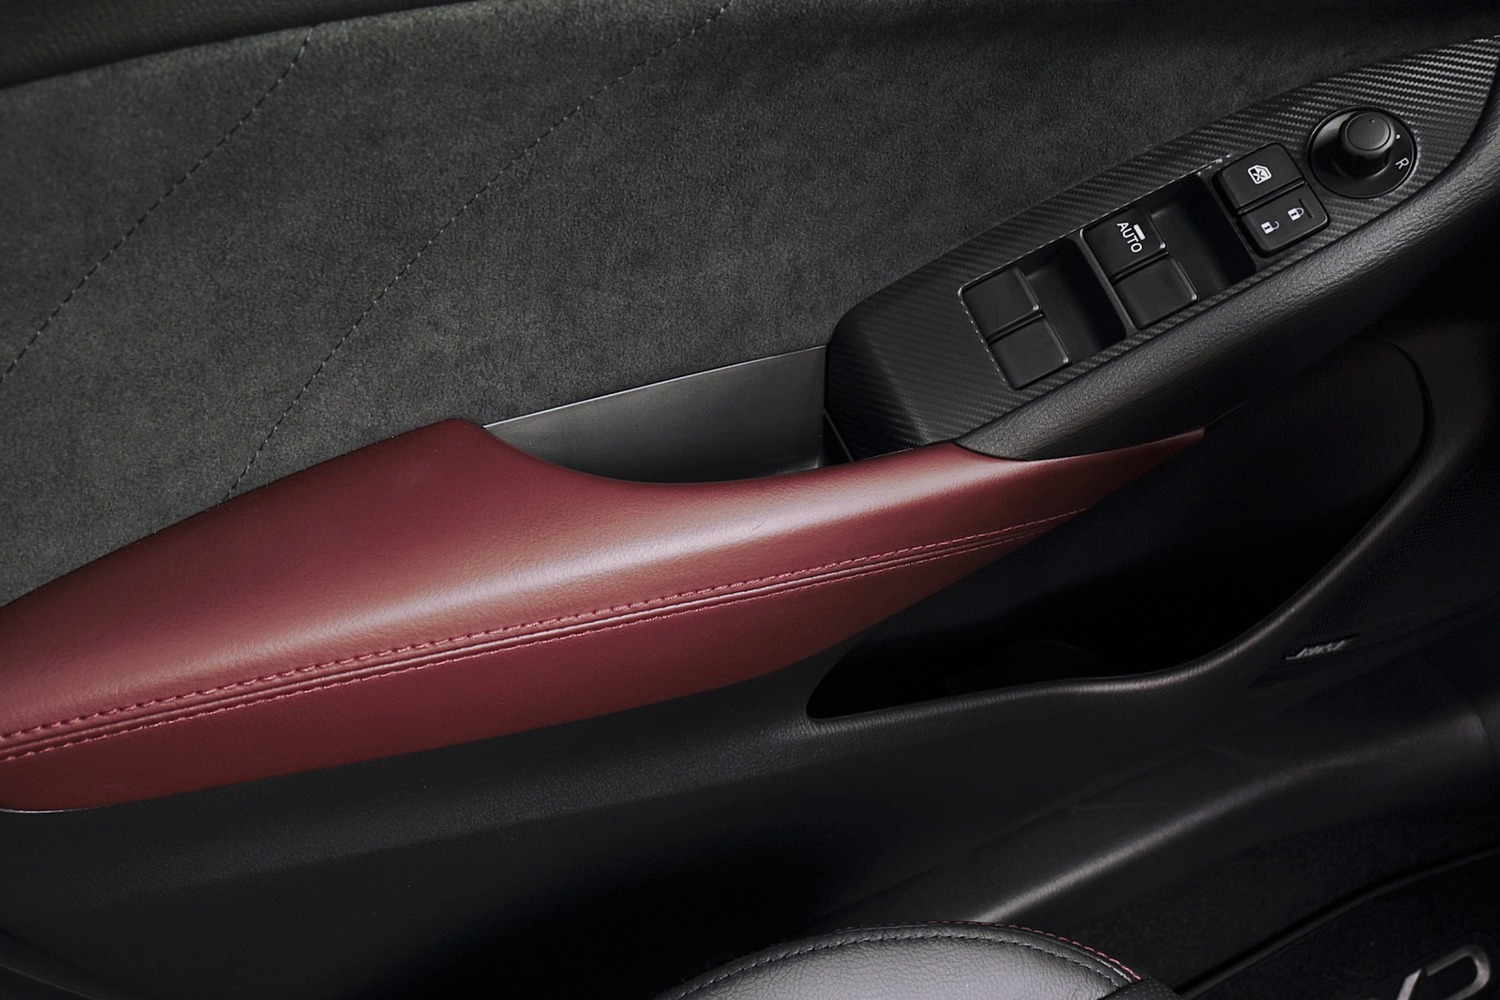 Mazda CX-3 Grand Touring 4dr SUV Interior Detail (2016 model year shown)